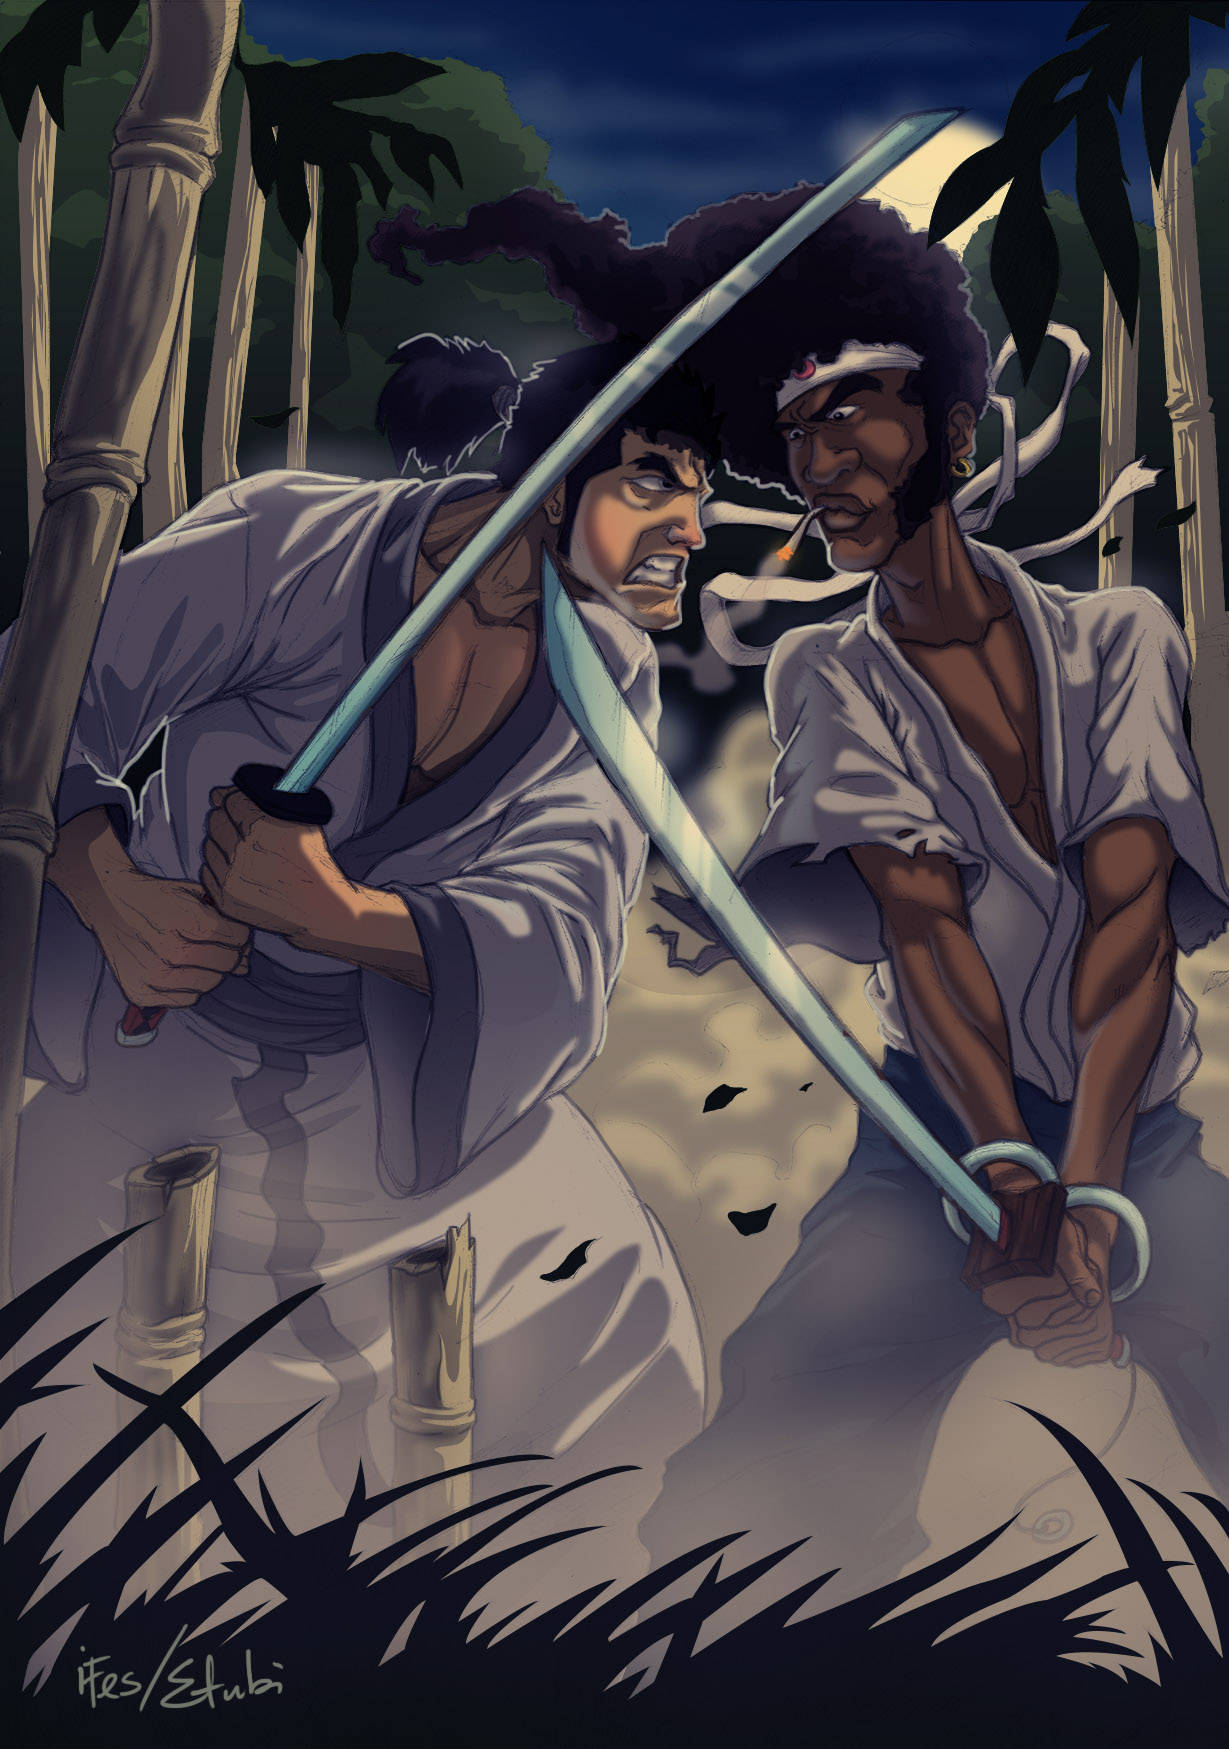 samurai jack and afro samurai (samurai jack and 1 more) drawn by etubi92